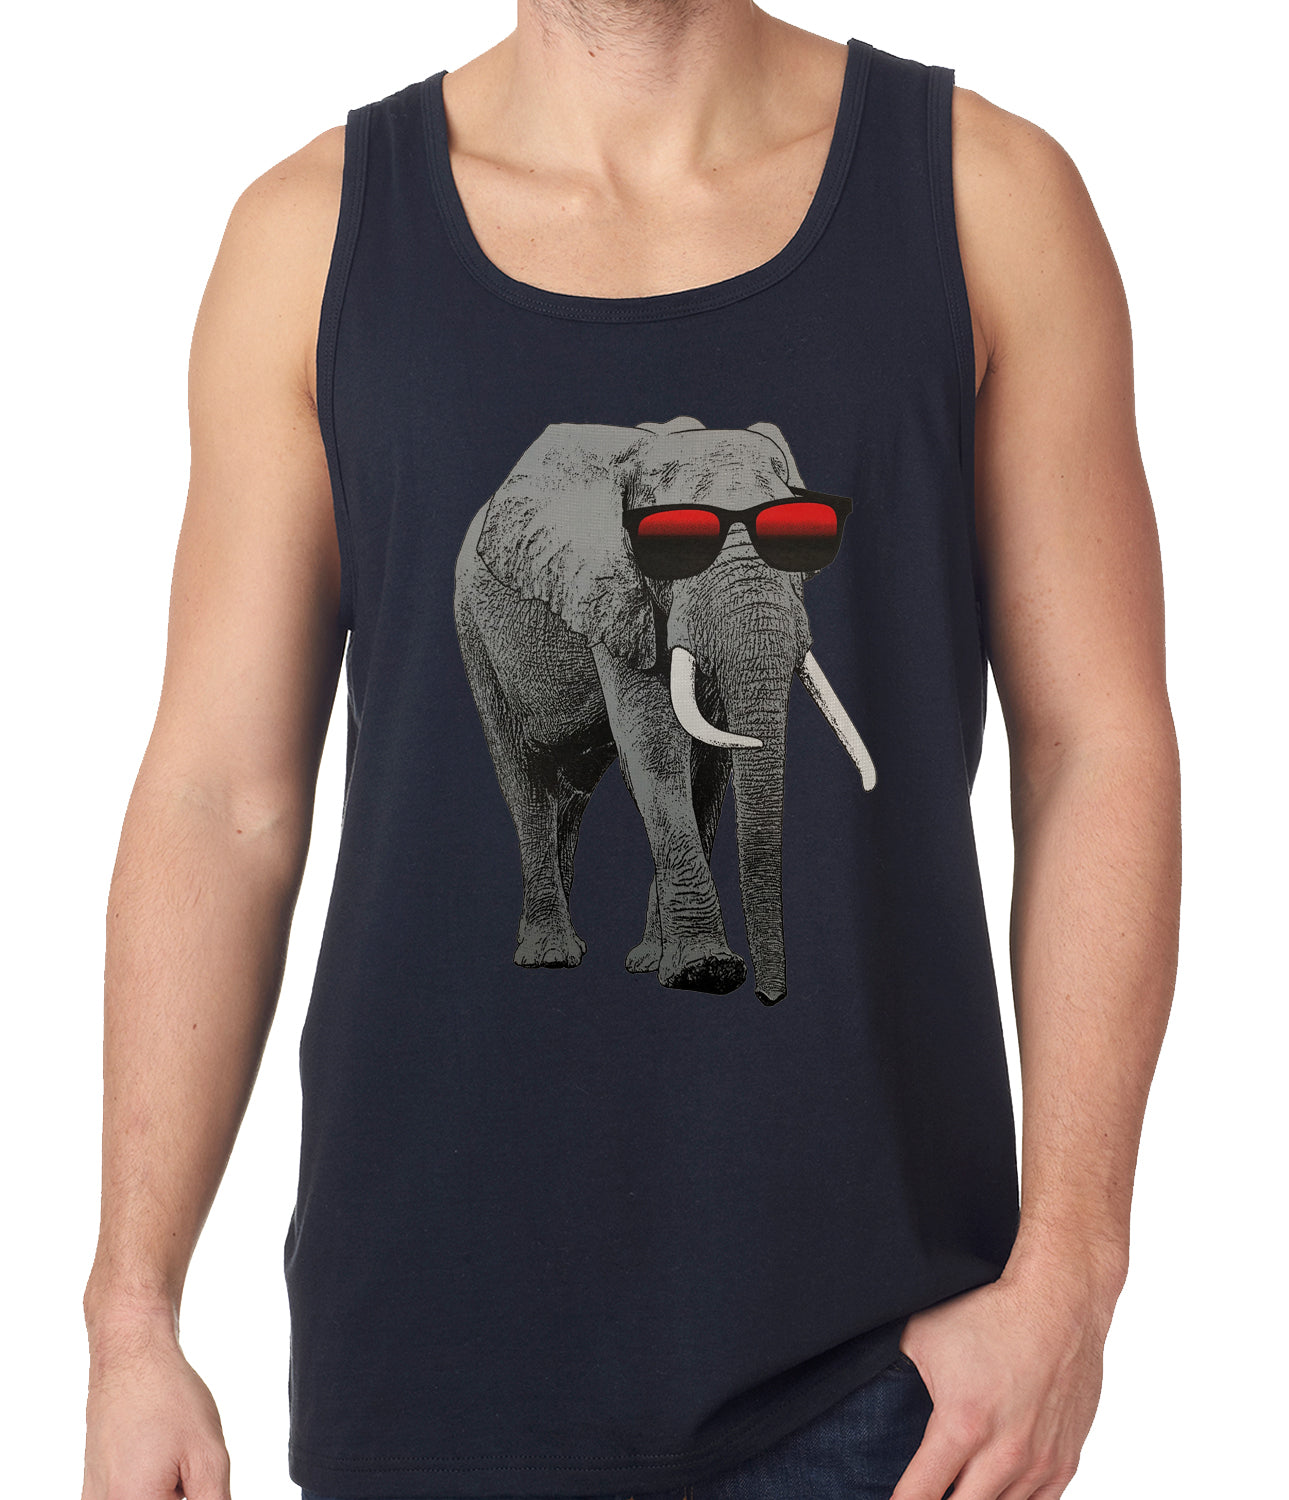 Elephant Wearing Sunglasses Tank Top